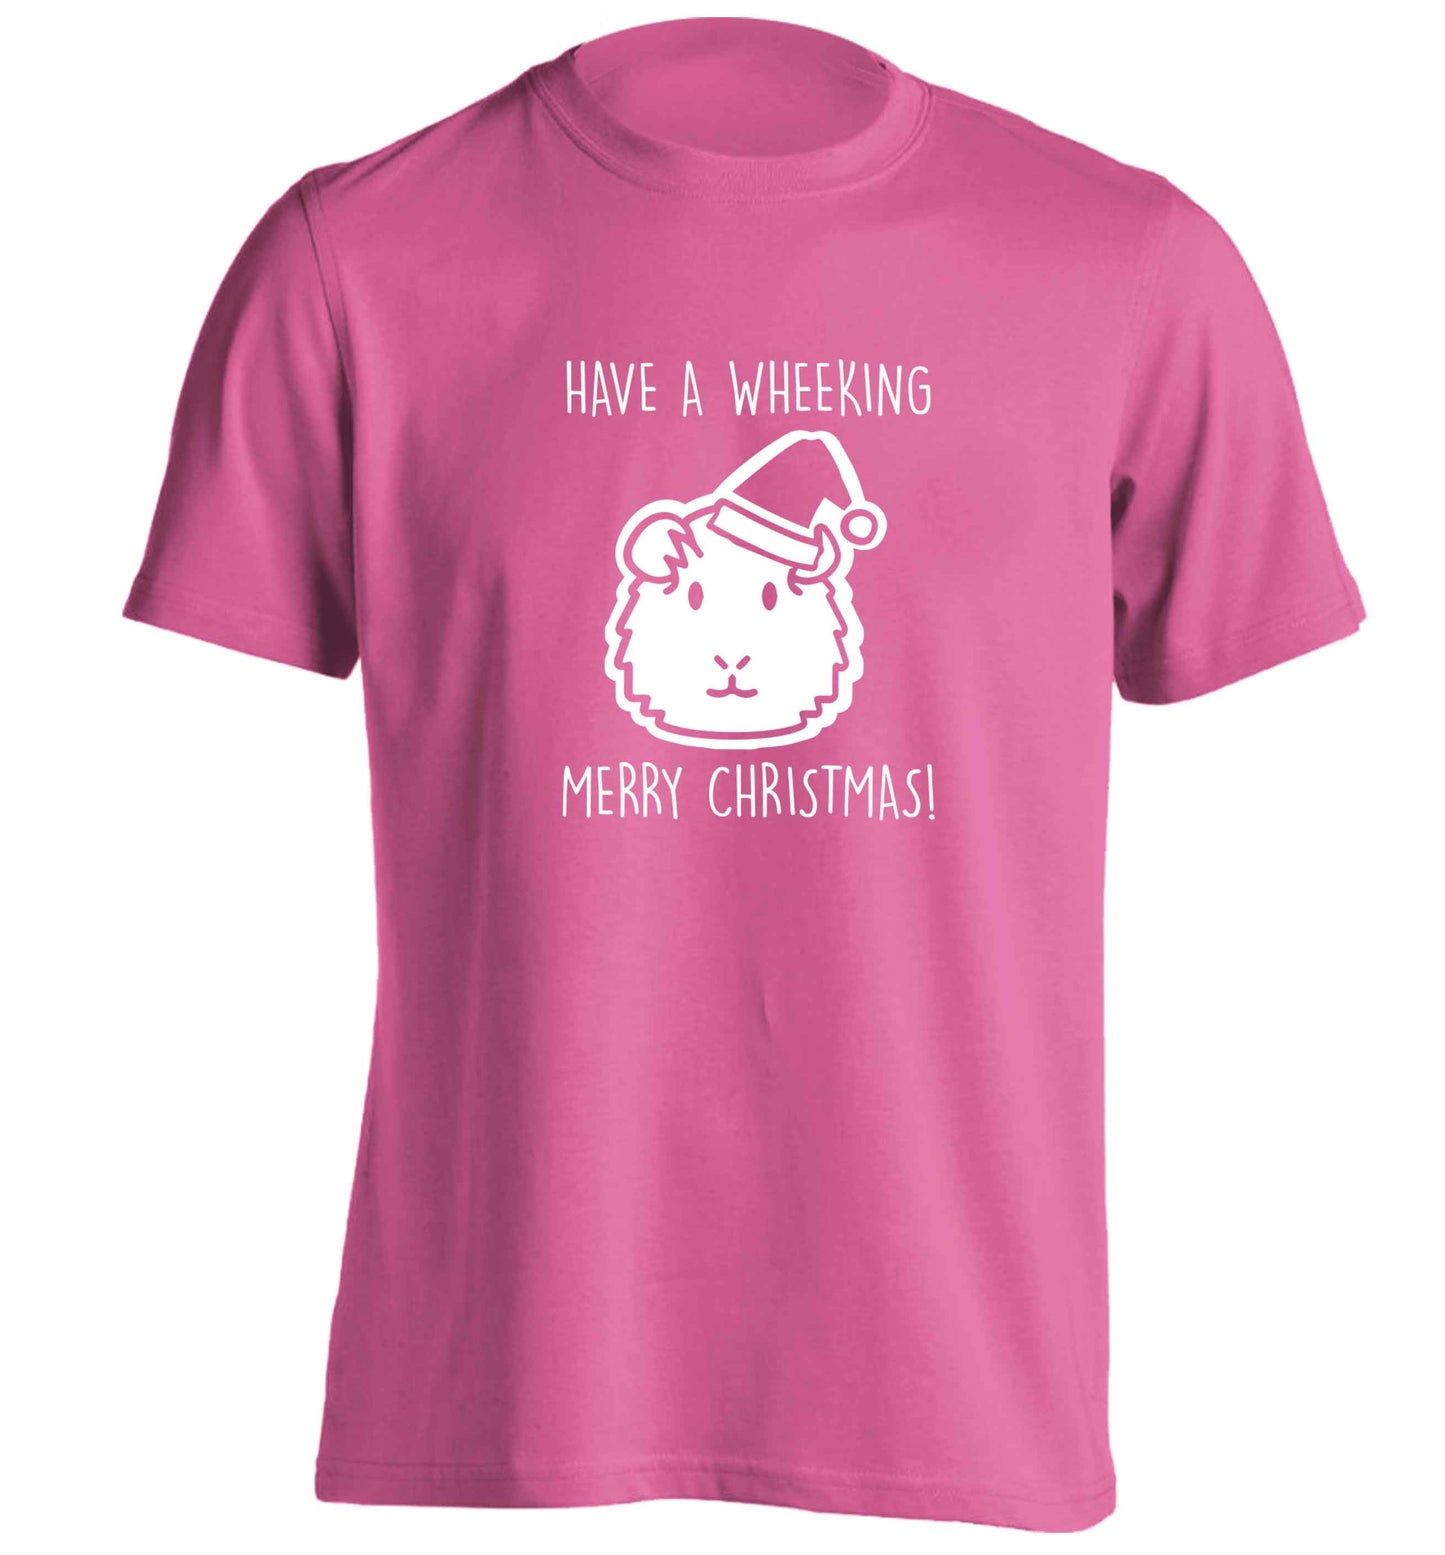 Have a wheeking merry Christmas adults unisex pink Tshirt 2XL